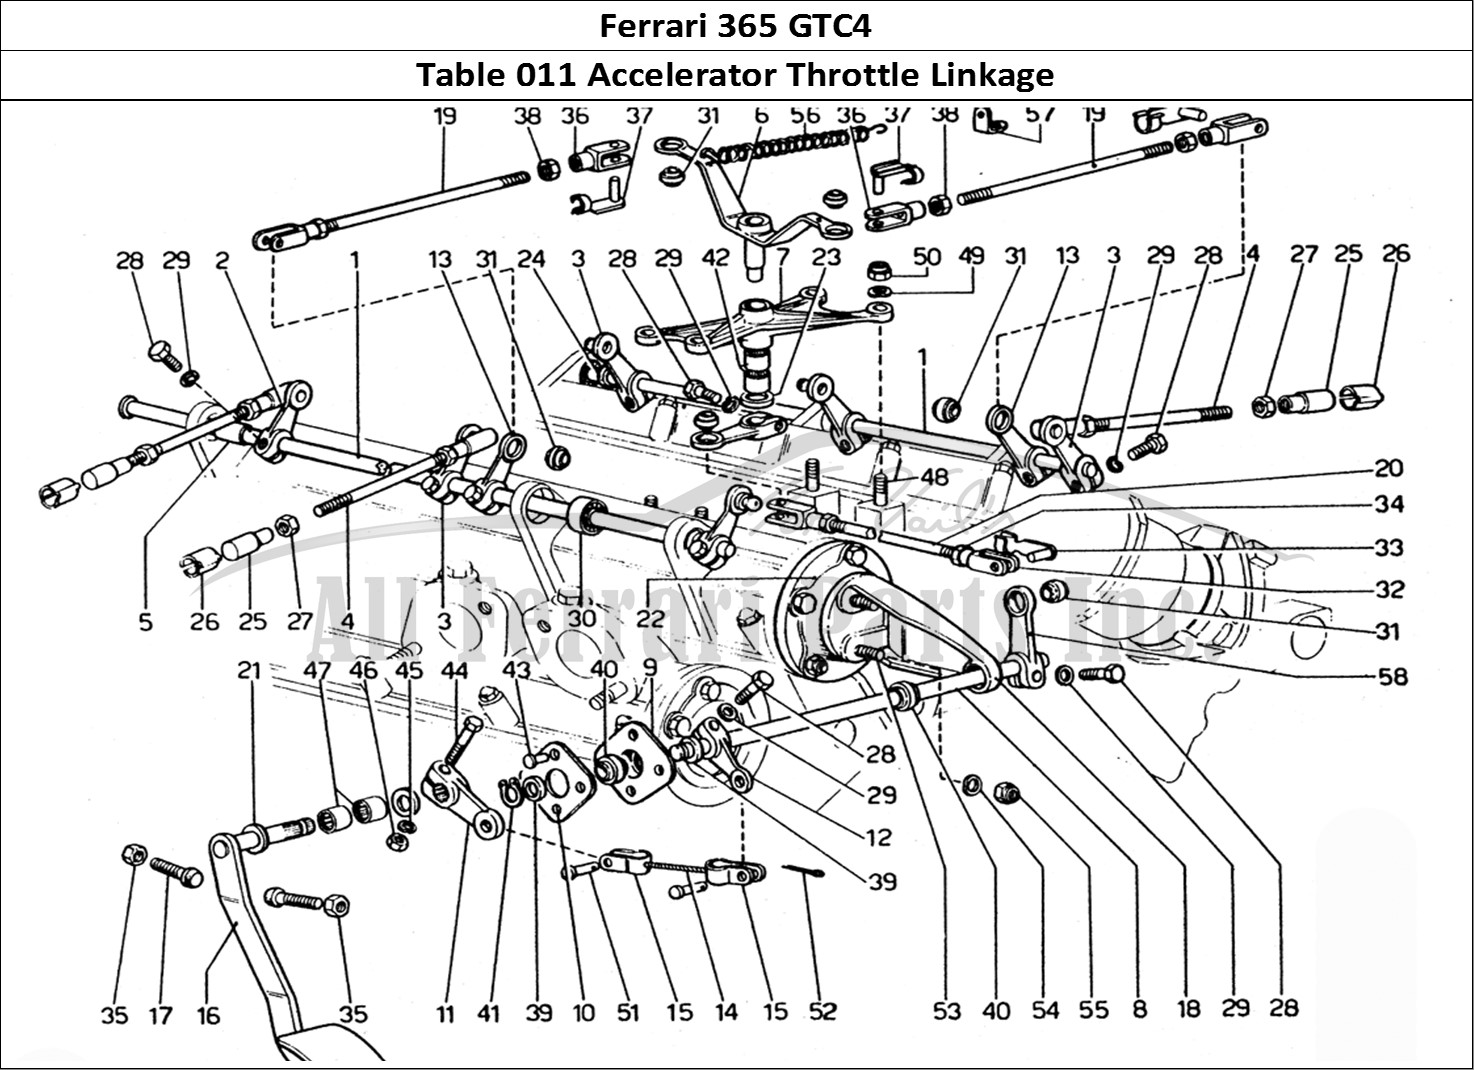 Ferrari Parts Ferrari 365 GTC4 (Mechanical) Page 011 Throttle linkage